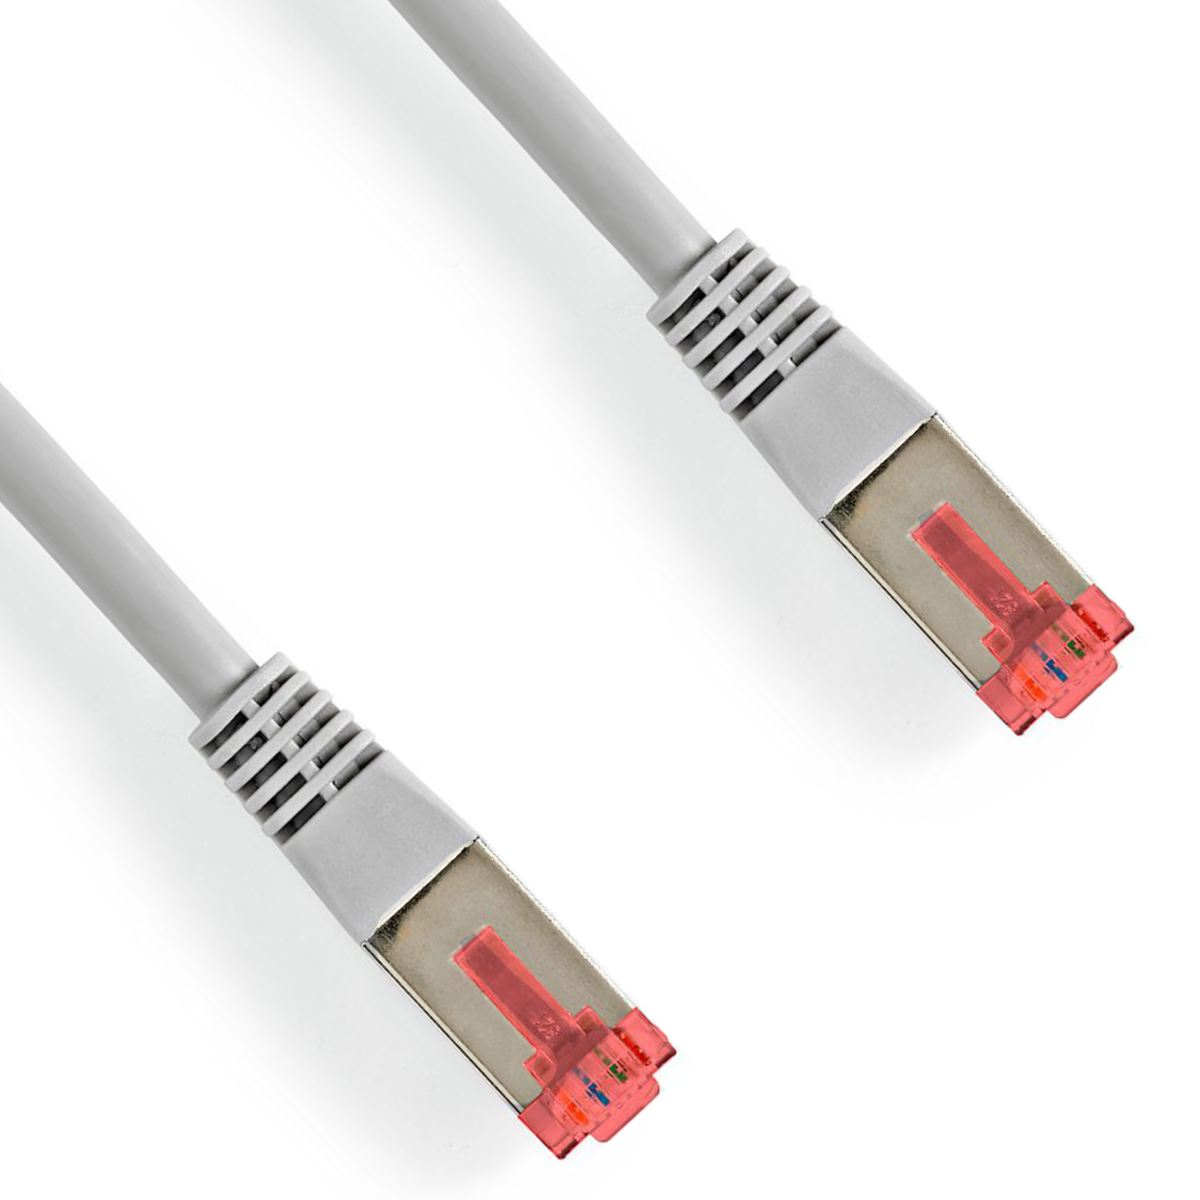 S/FTP kabel Cat 6 - Nedis